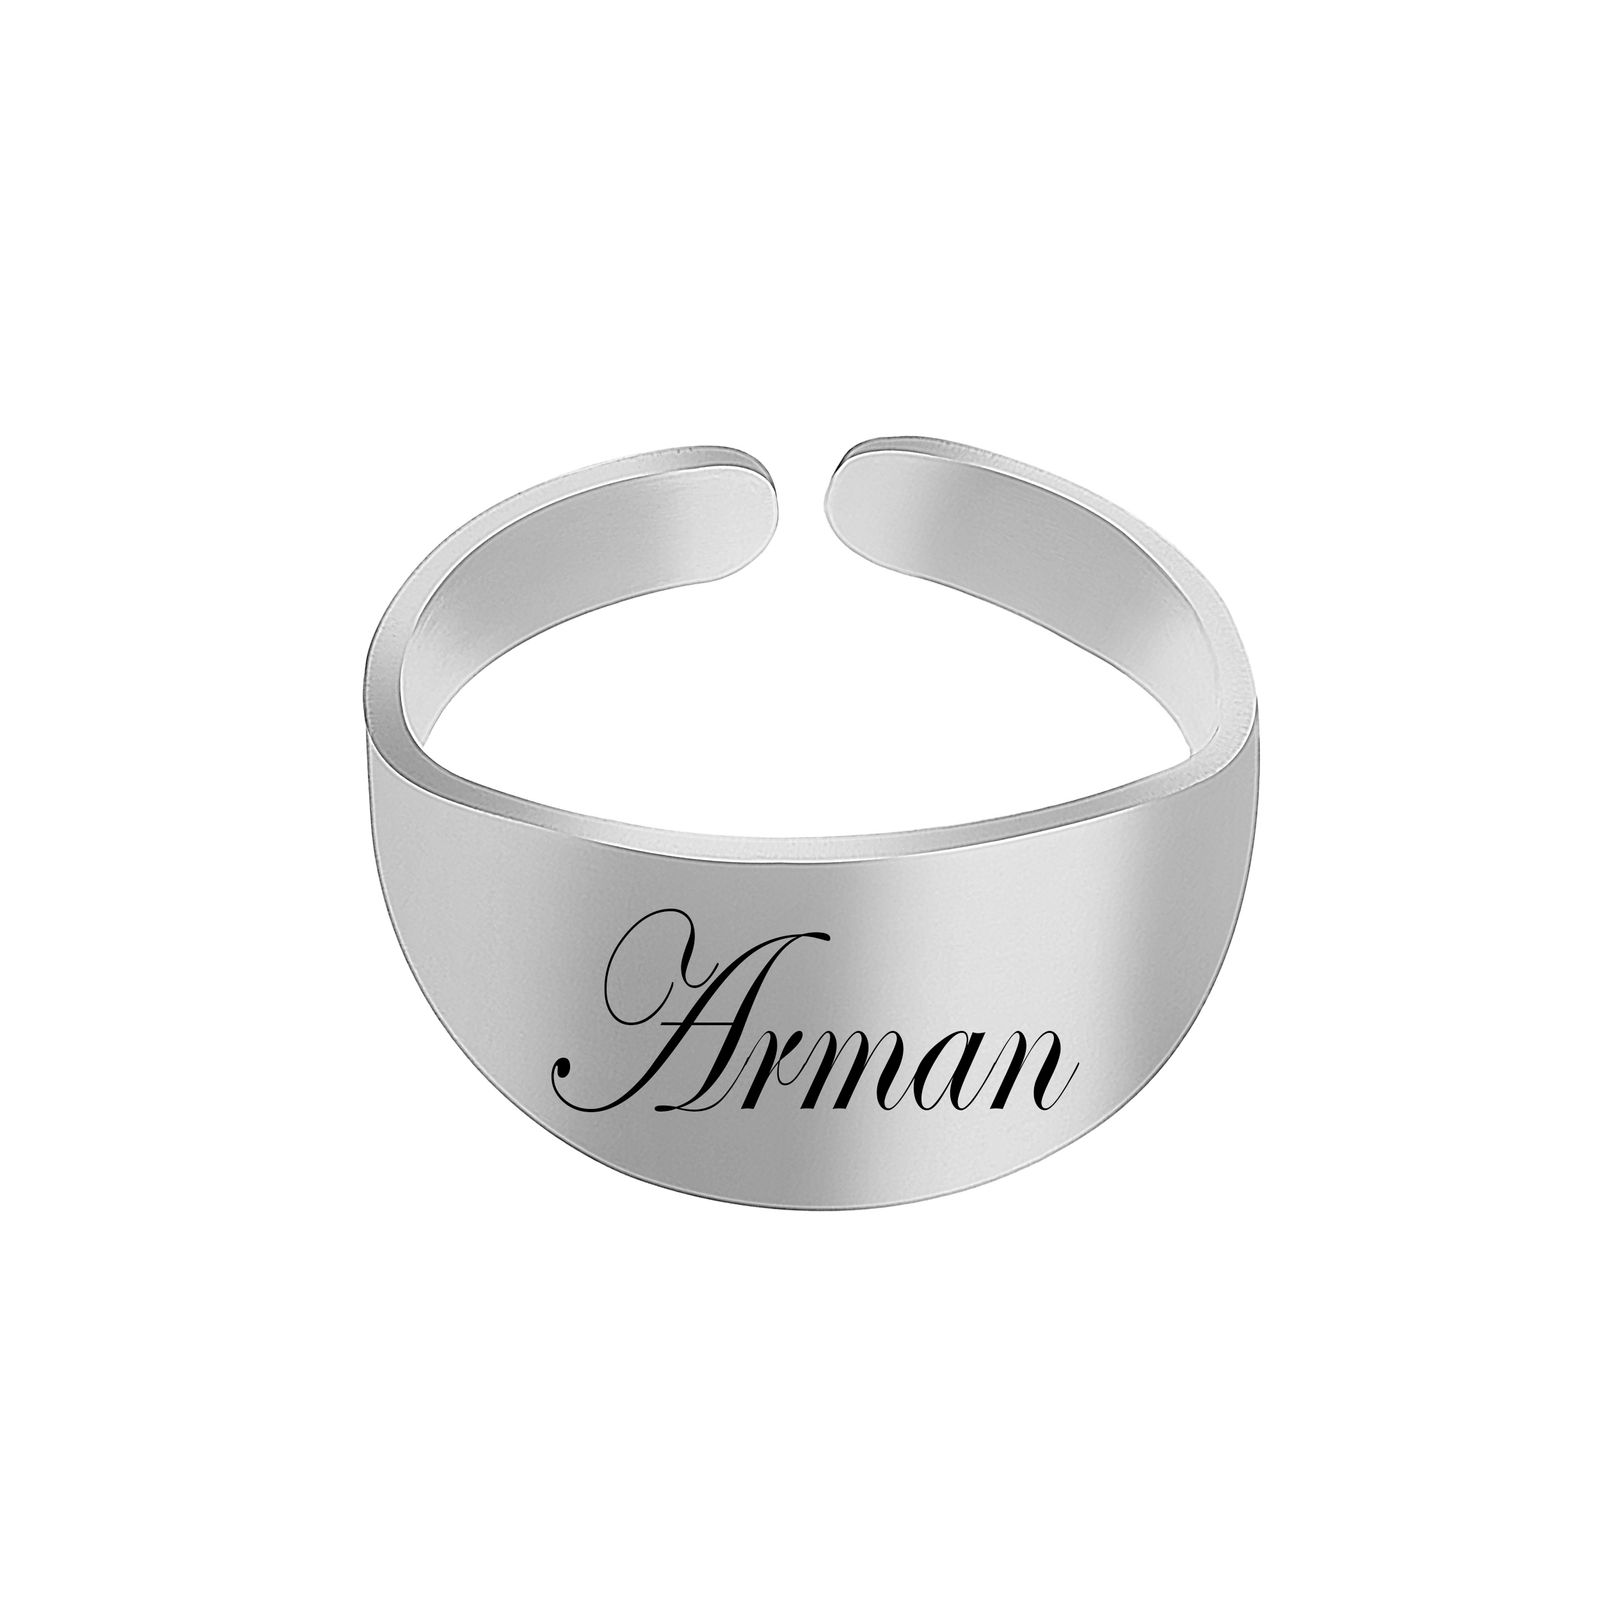 انگشتر مردانه لیردا مدل اسم آرمان astl 0033 -  - 1